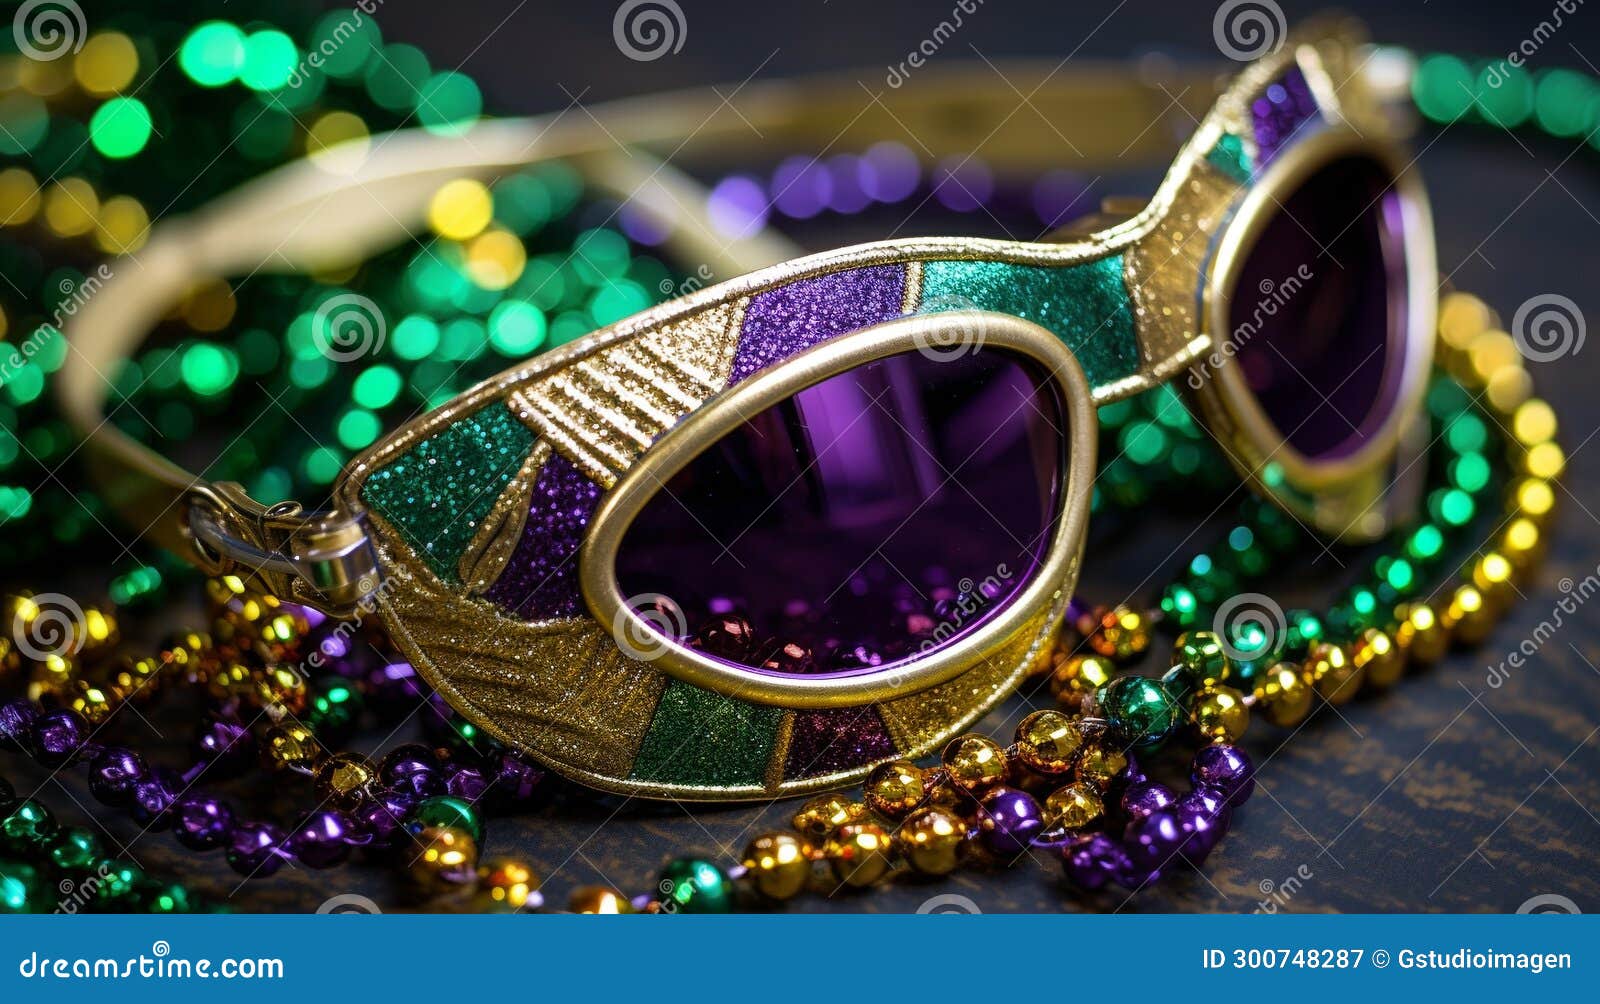 Shiny, Multi Colored Sunglasses Reflect Vibrant Mardi Gras Celebration ...